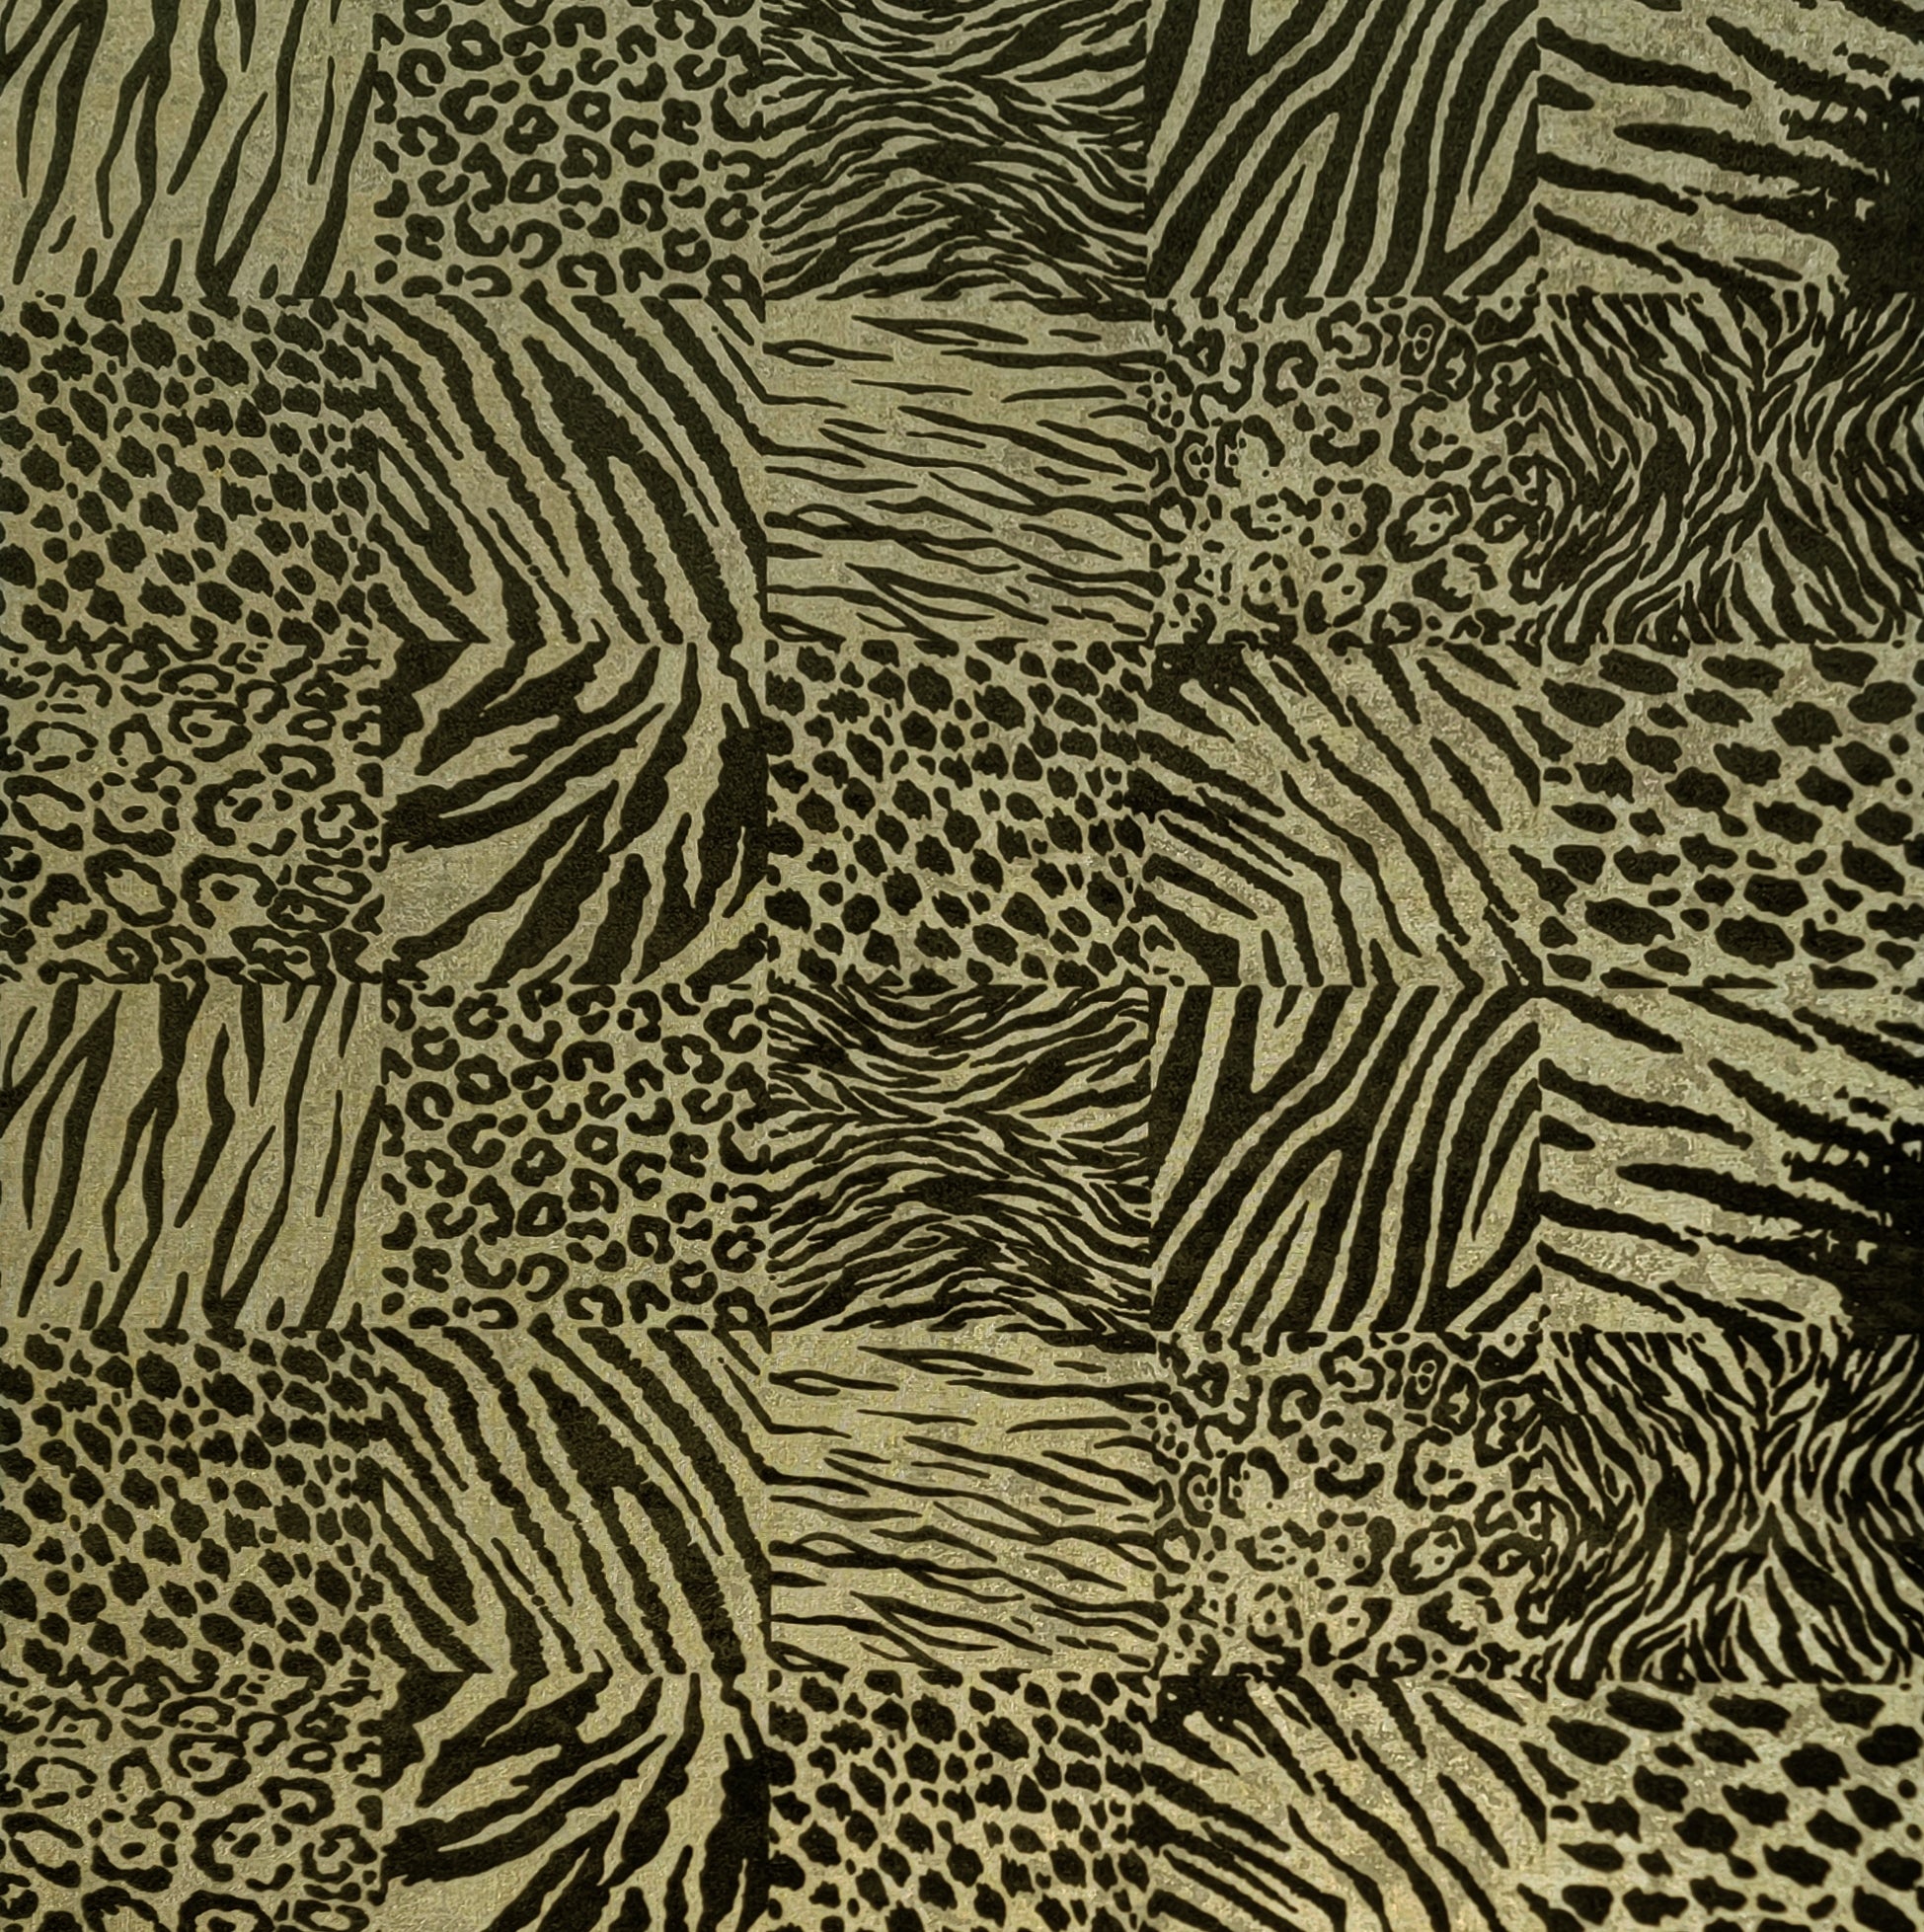 Leopard Metallic Animal Print Wallpaper in Black and Gold